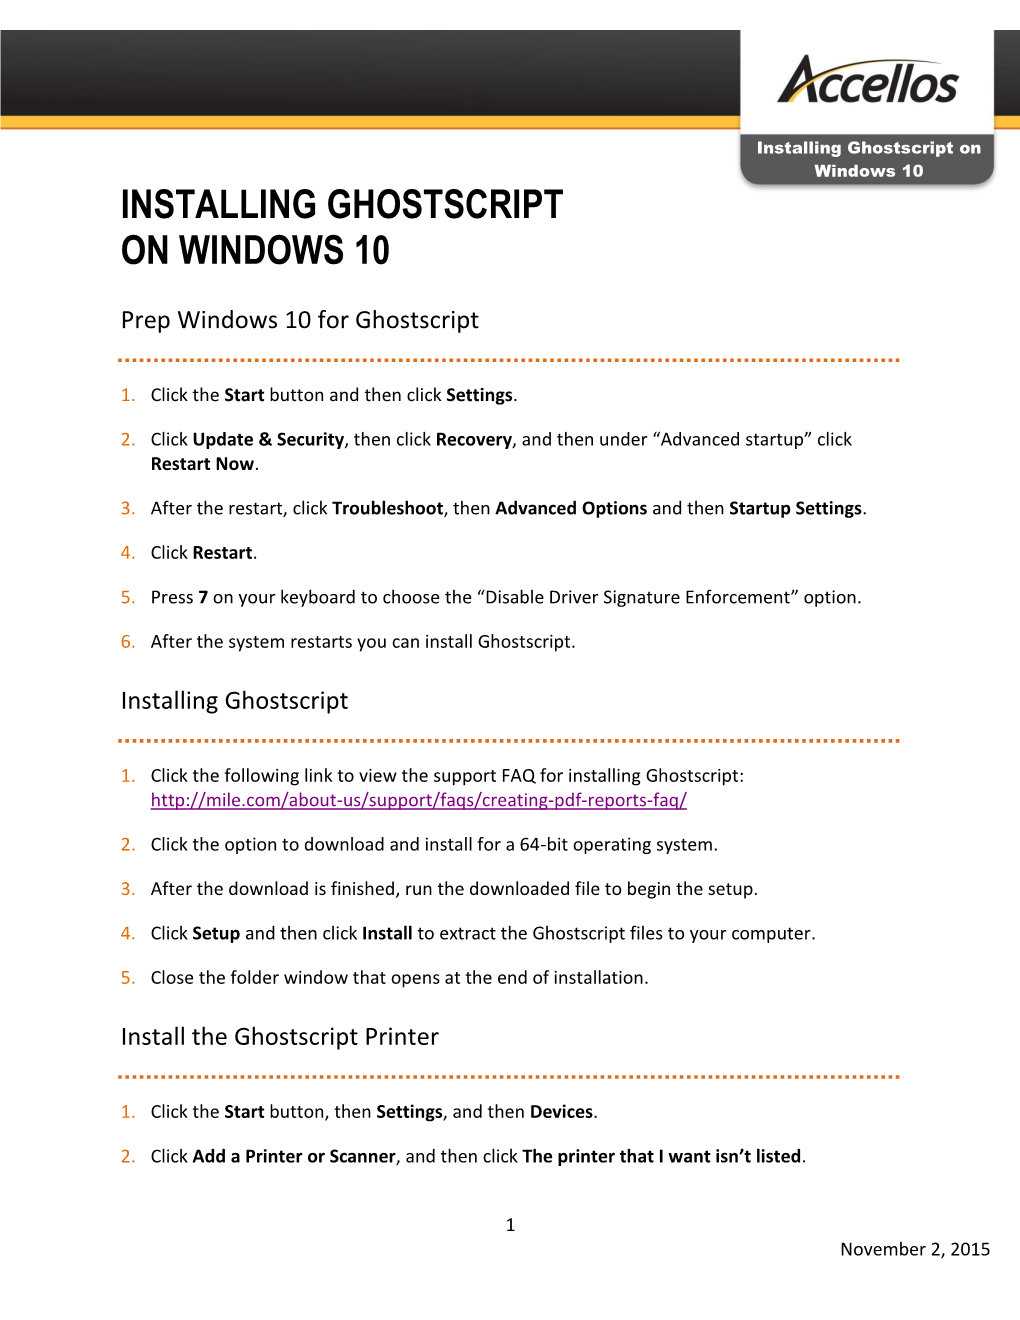 Installing Ghostscript on Windows 10 INSTALLING GHOSTSCRIPT on WINDOWS 10